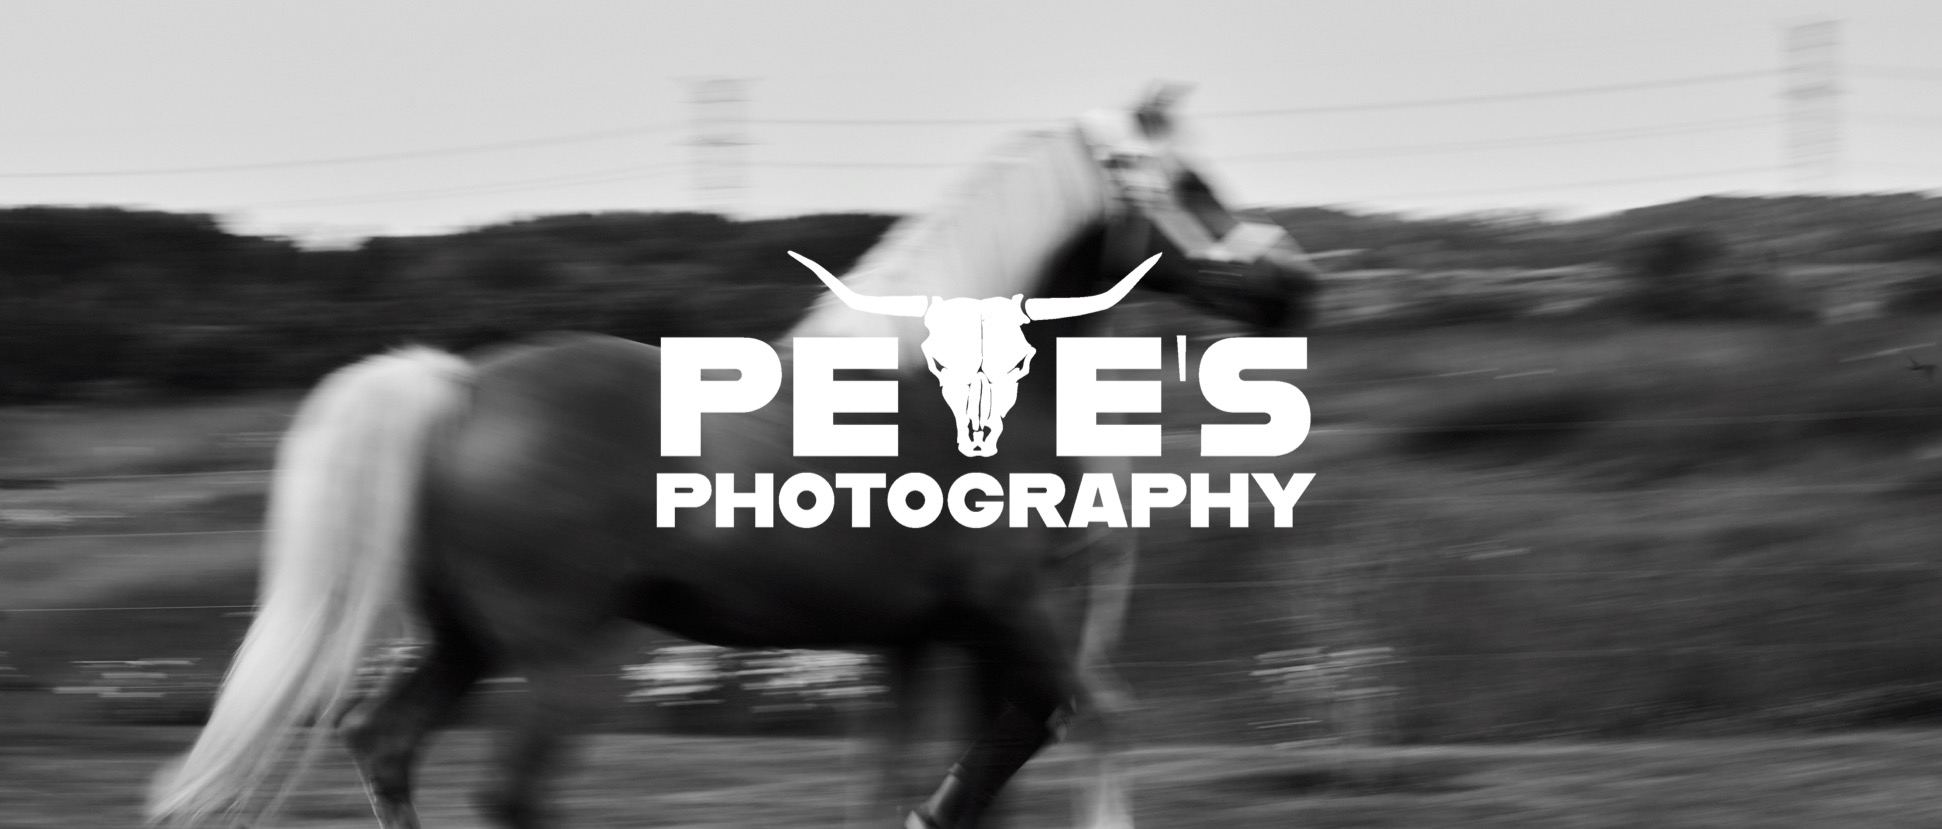 Pete's Photography - Equine Photographer - Ontario Canada